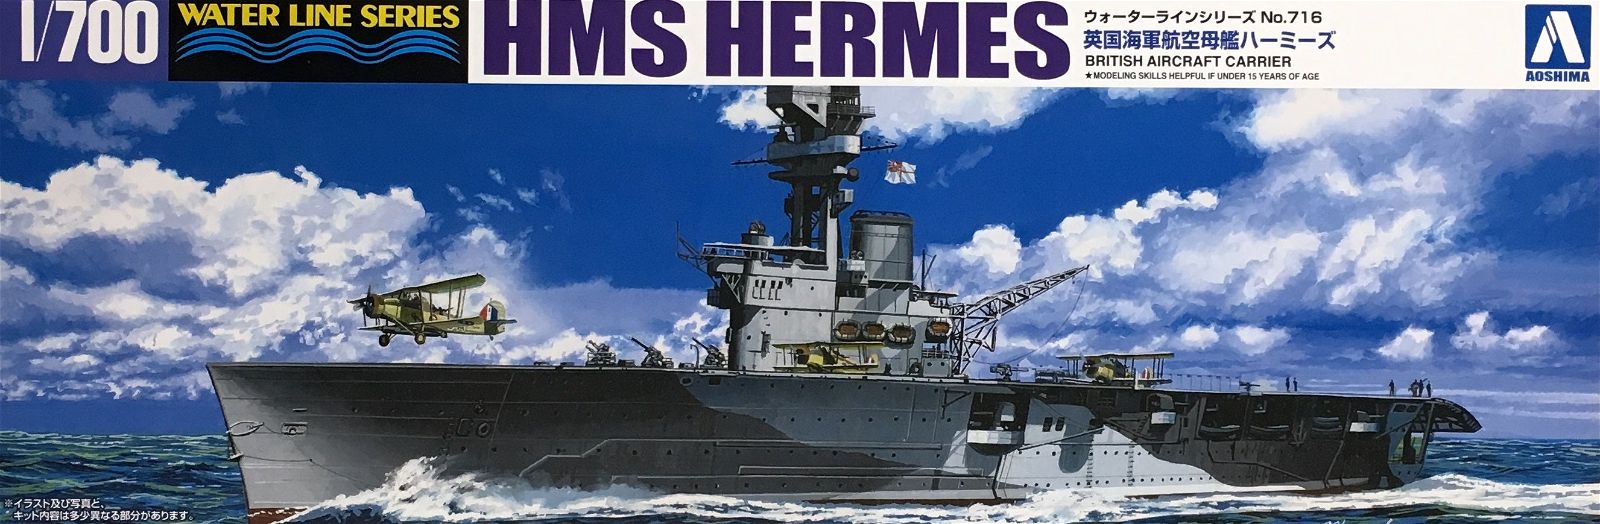 Aoshima Royal Navy Carriers HMS Hermes Indian Ocean Battle off Ceylon - BanzaiHobby